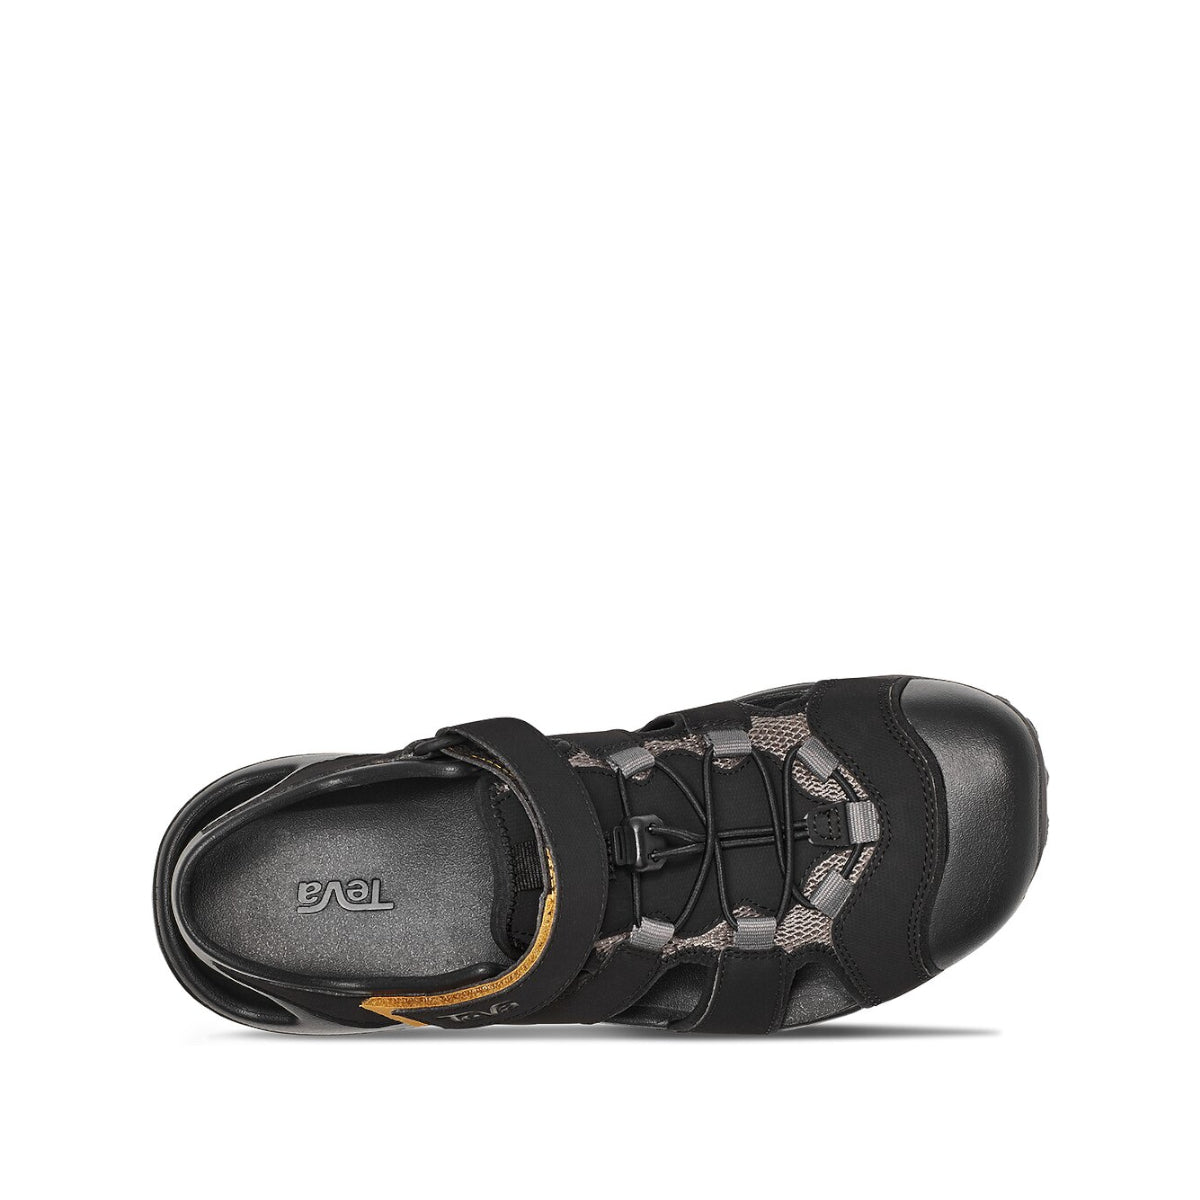 M Flintwood - shoe&me - Teva - Sandal - Eco Collection, Mens, Sandal, Shoes, Summer 21, Vegan